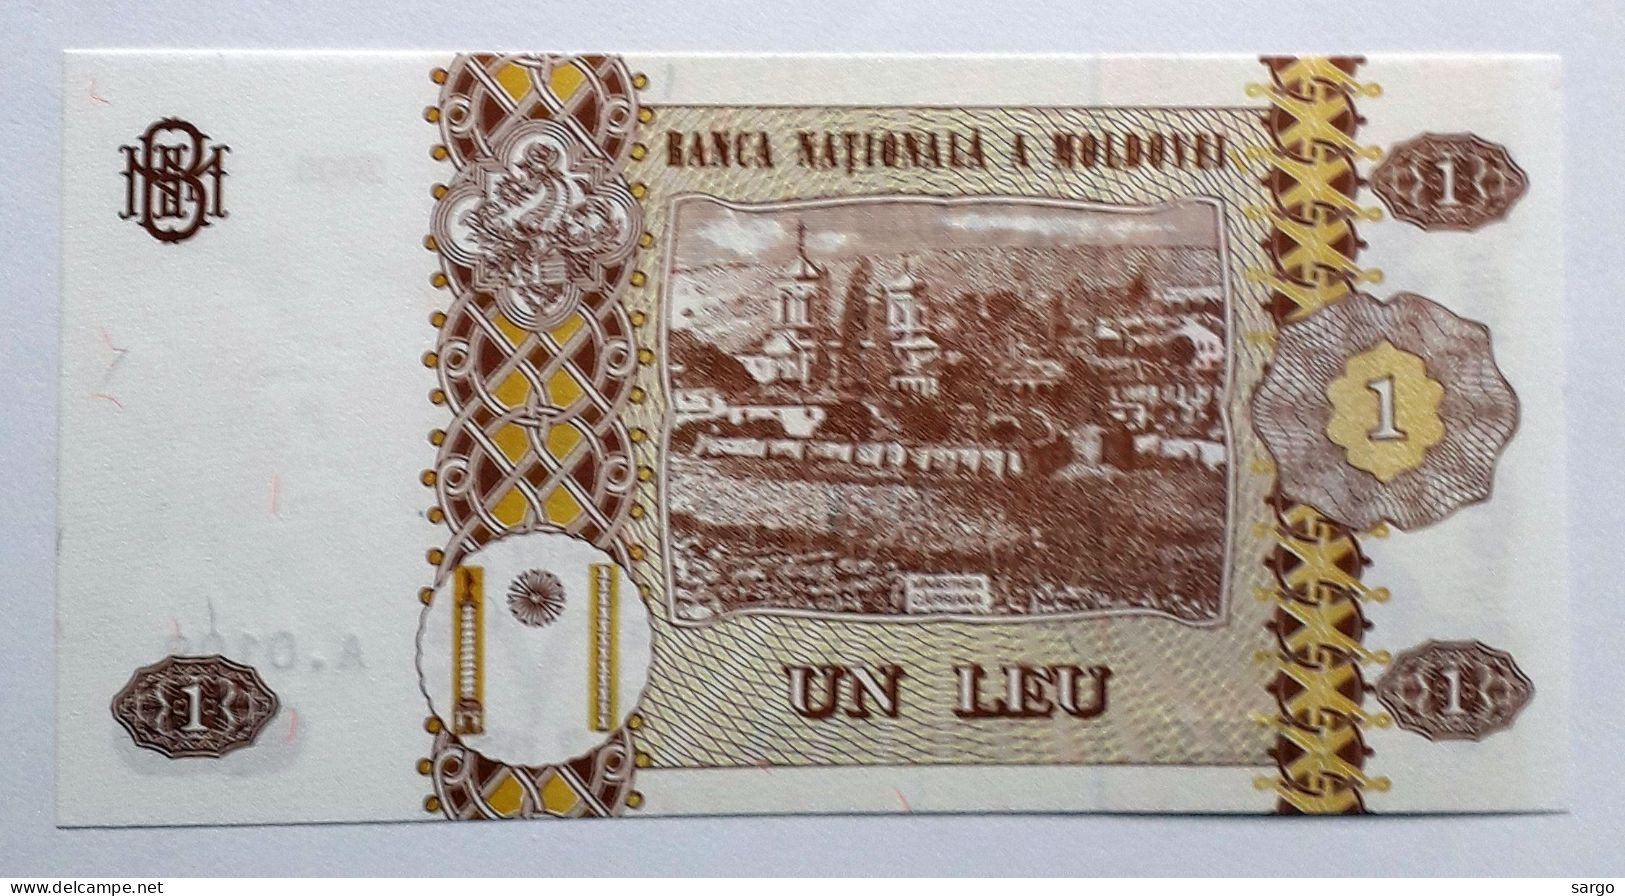 MOLDOVA - 1 LEU - 2015 - UNC - P 21 - BANKNOTES - PAPER MONEY - CARTAMONETA - - Moldova